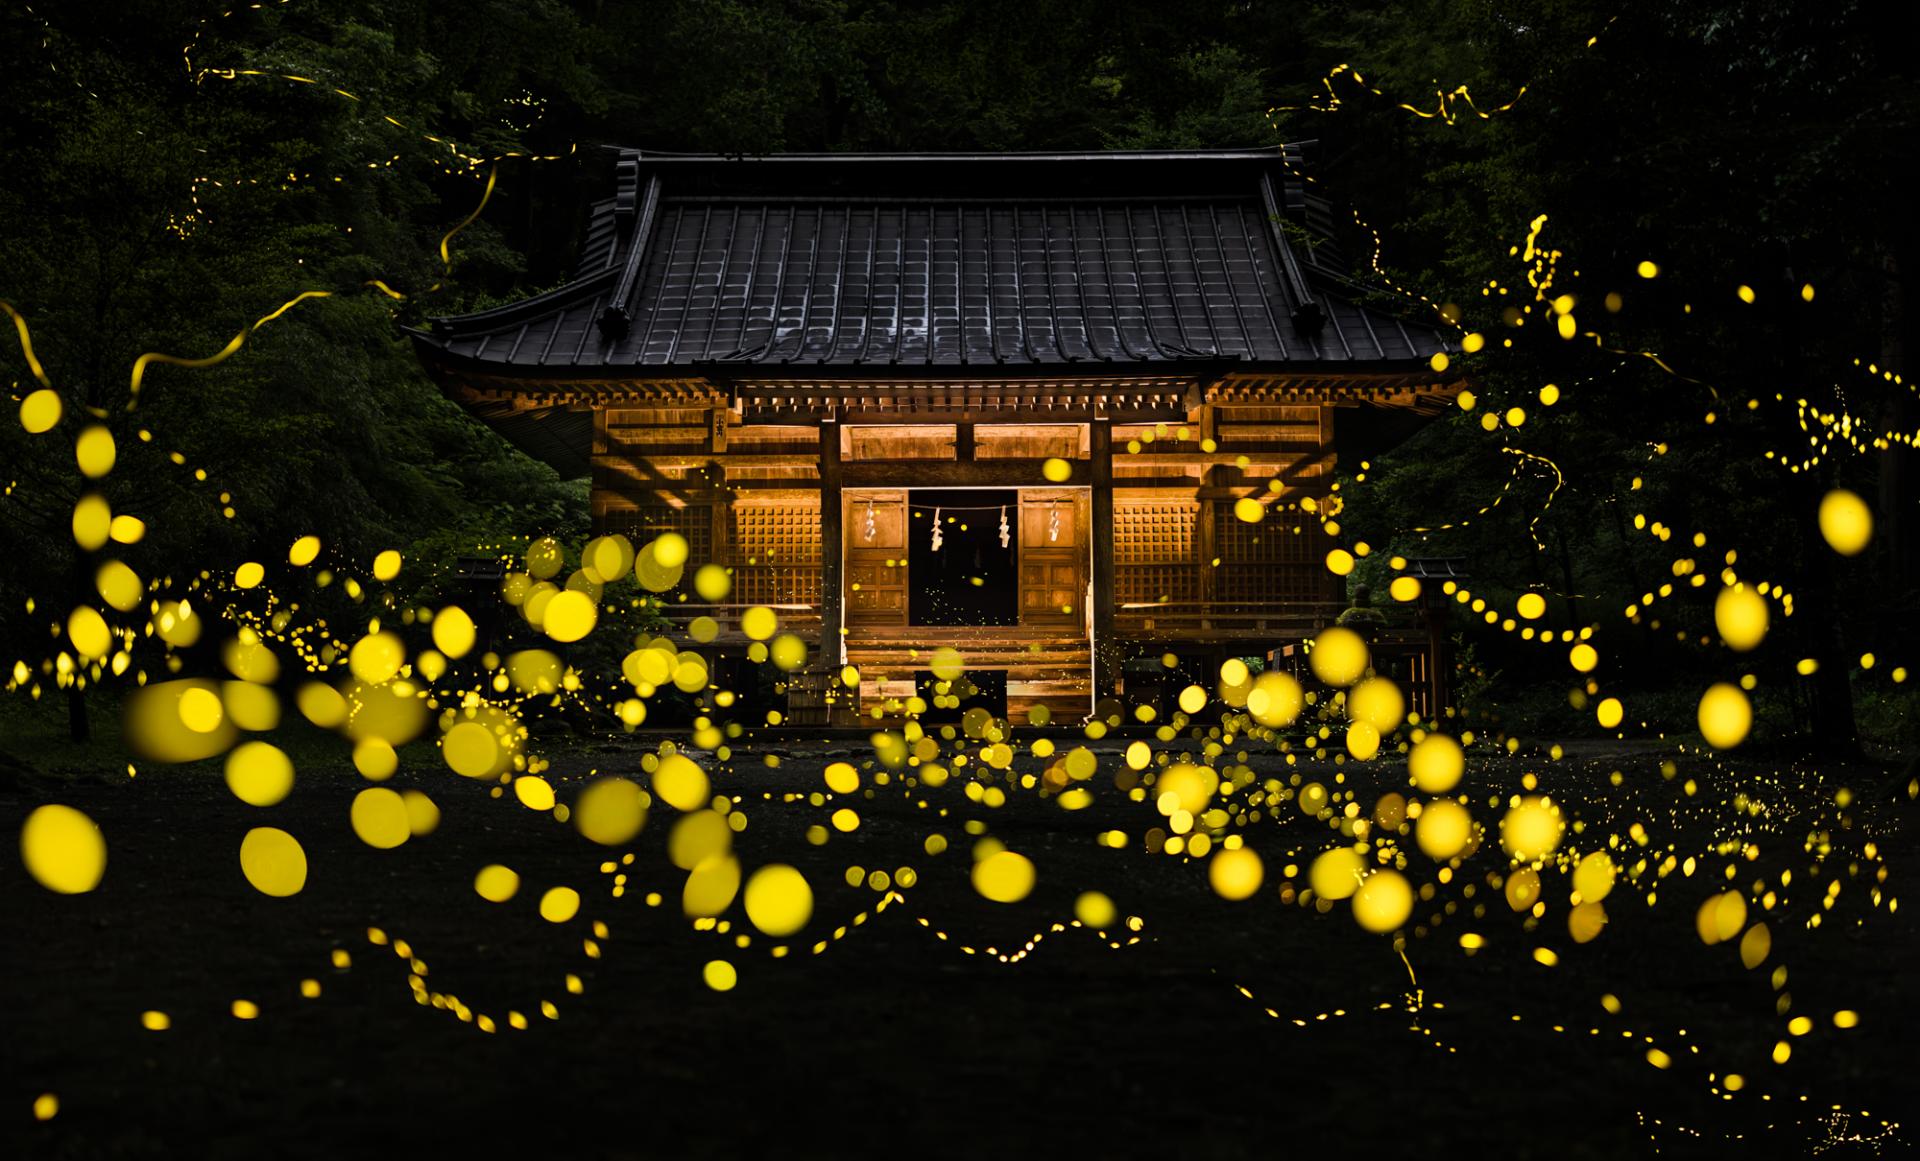 European Photography Awards Winner - Fireflies flying